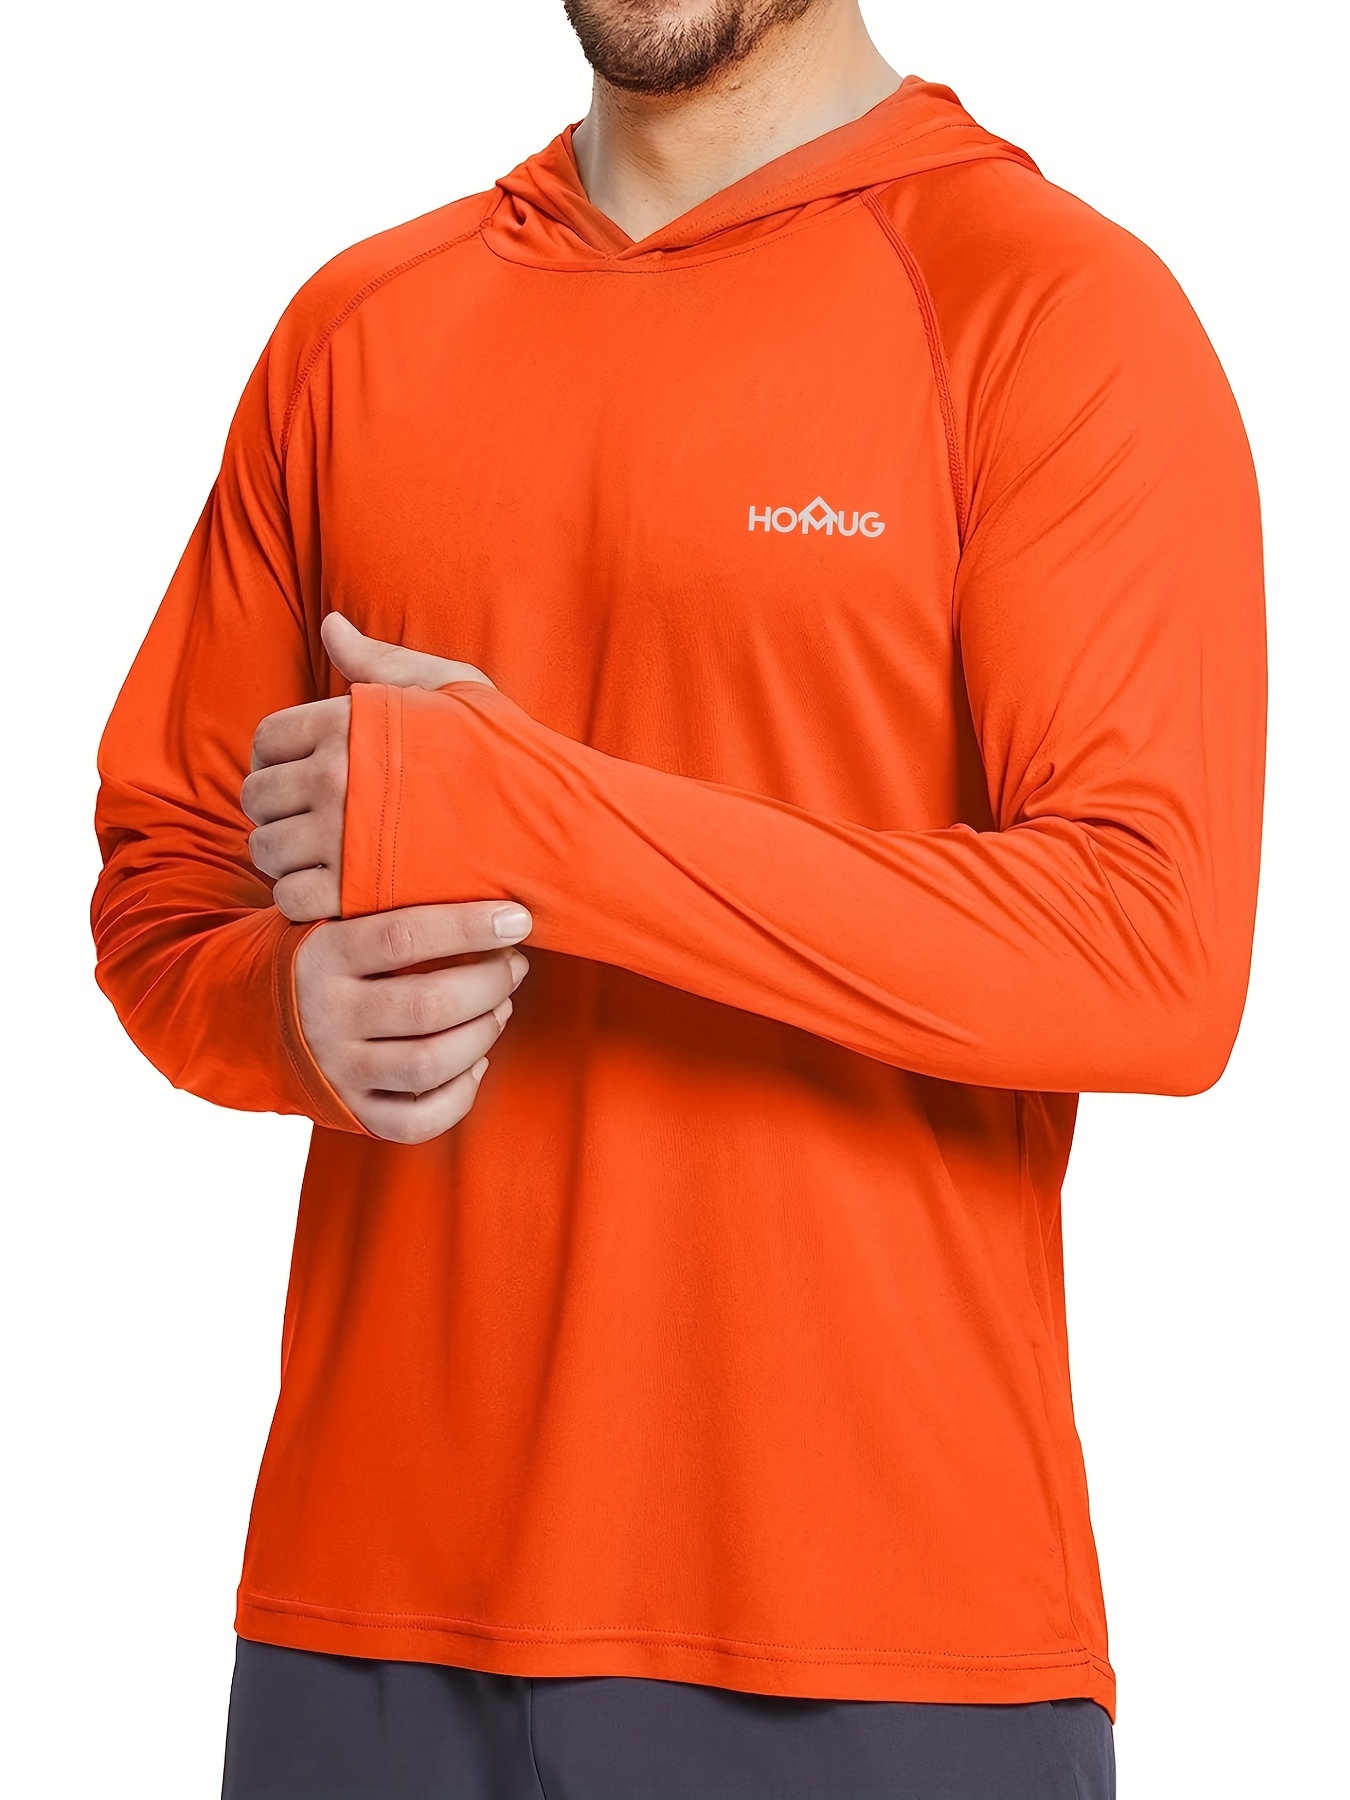 Men's Shirts UPF 50+ Sun Protection Hoodie Long Sleeve SPF/UV Quick Dry  Lightweight Fishing Workout Thumbhole Shirt Male